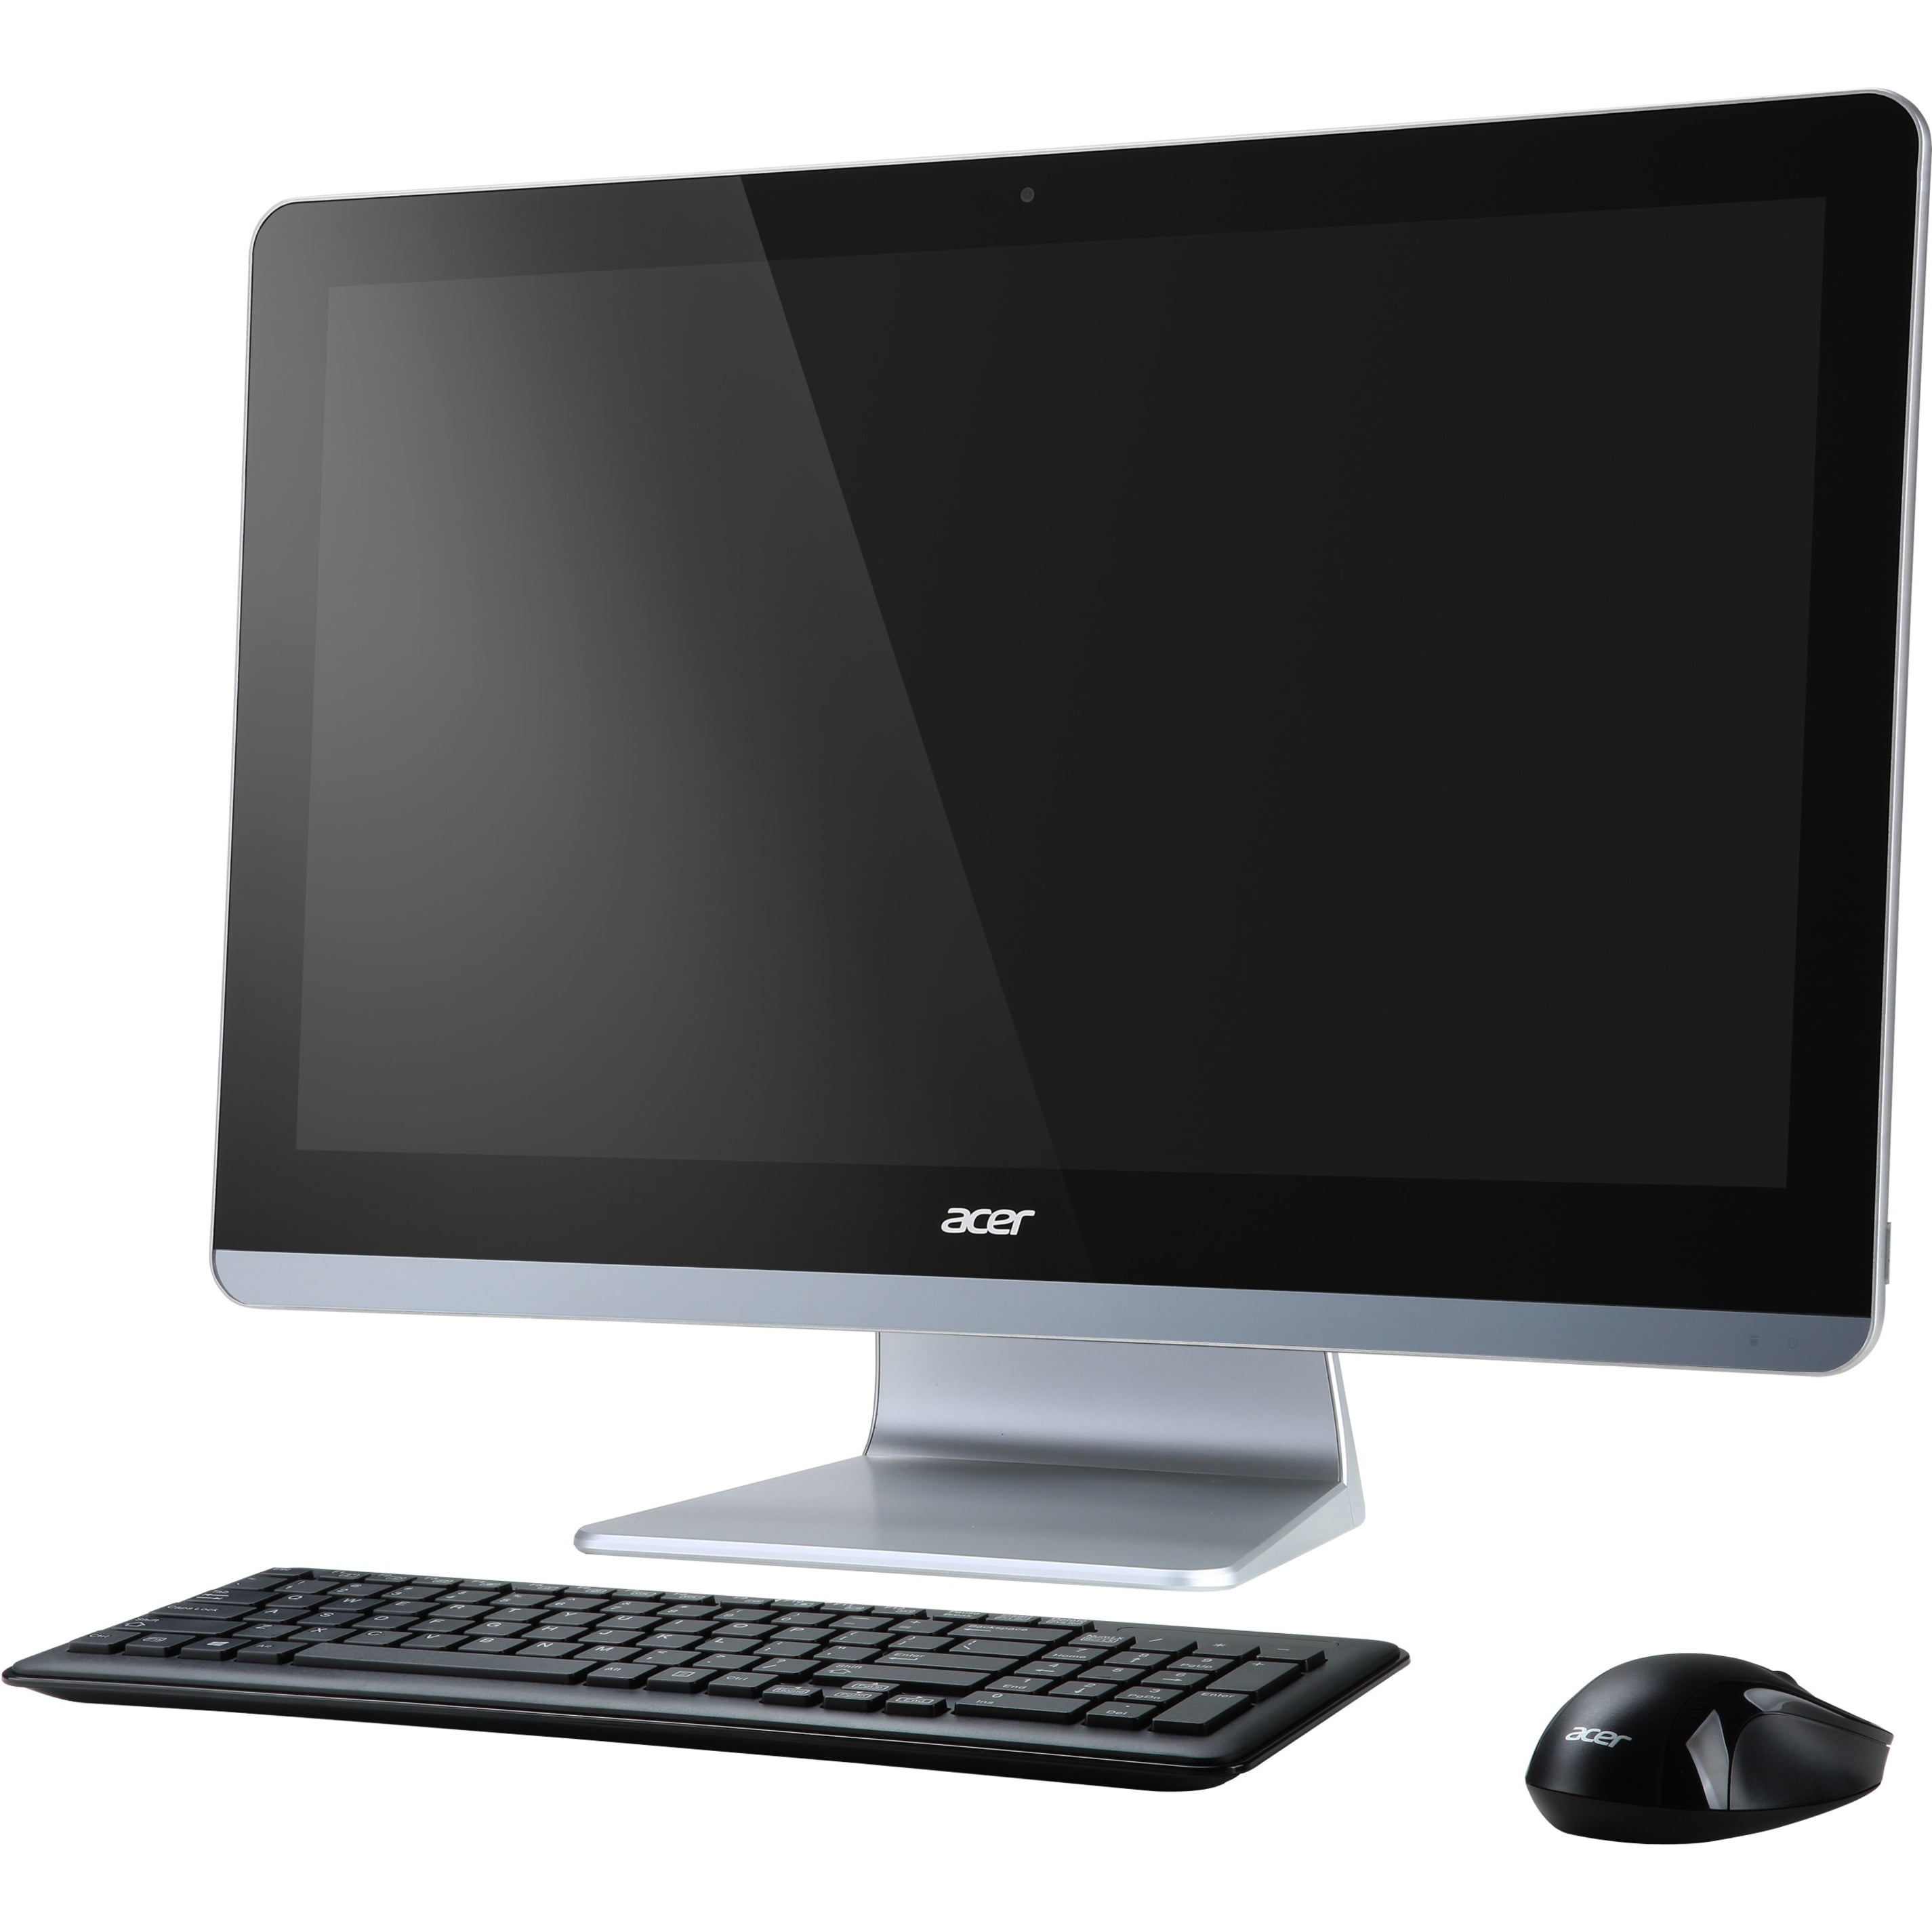 Класс моноблоков. Компьютер моноблок Acer Aspire ZC-605. Acer n214. Acer 3165ngw. Компьютер Асер без системного блока.